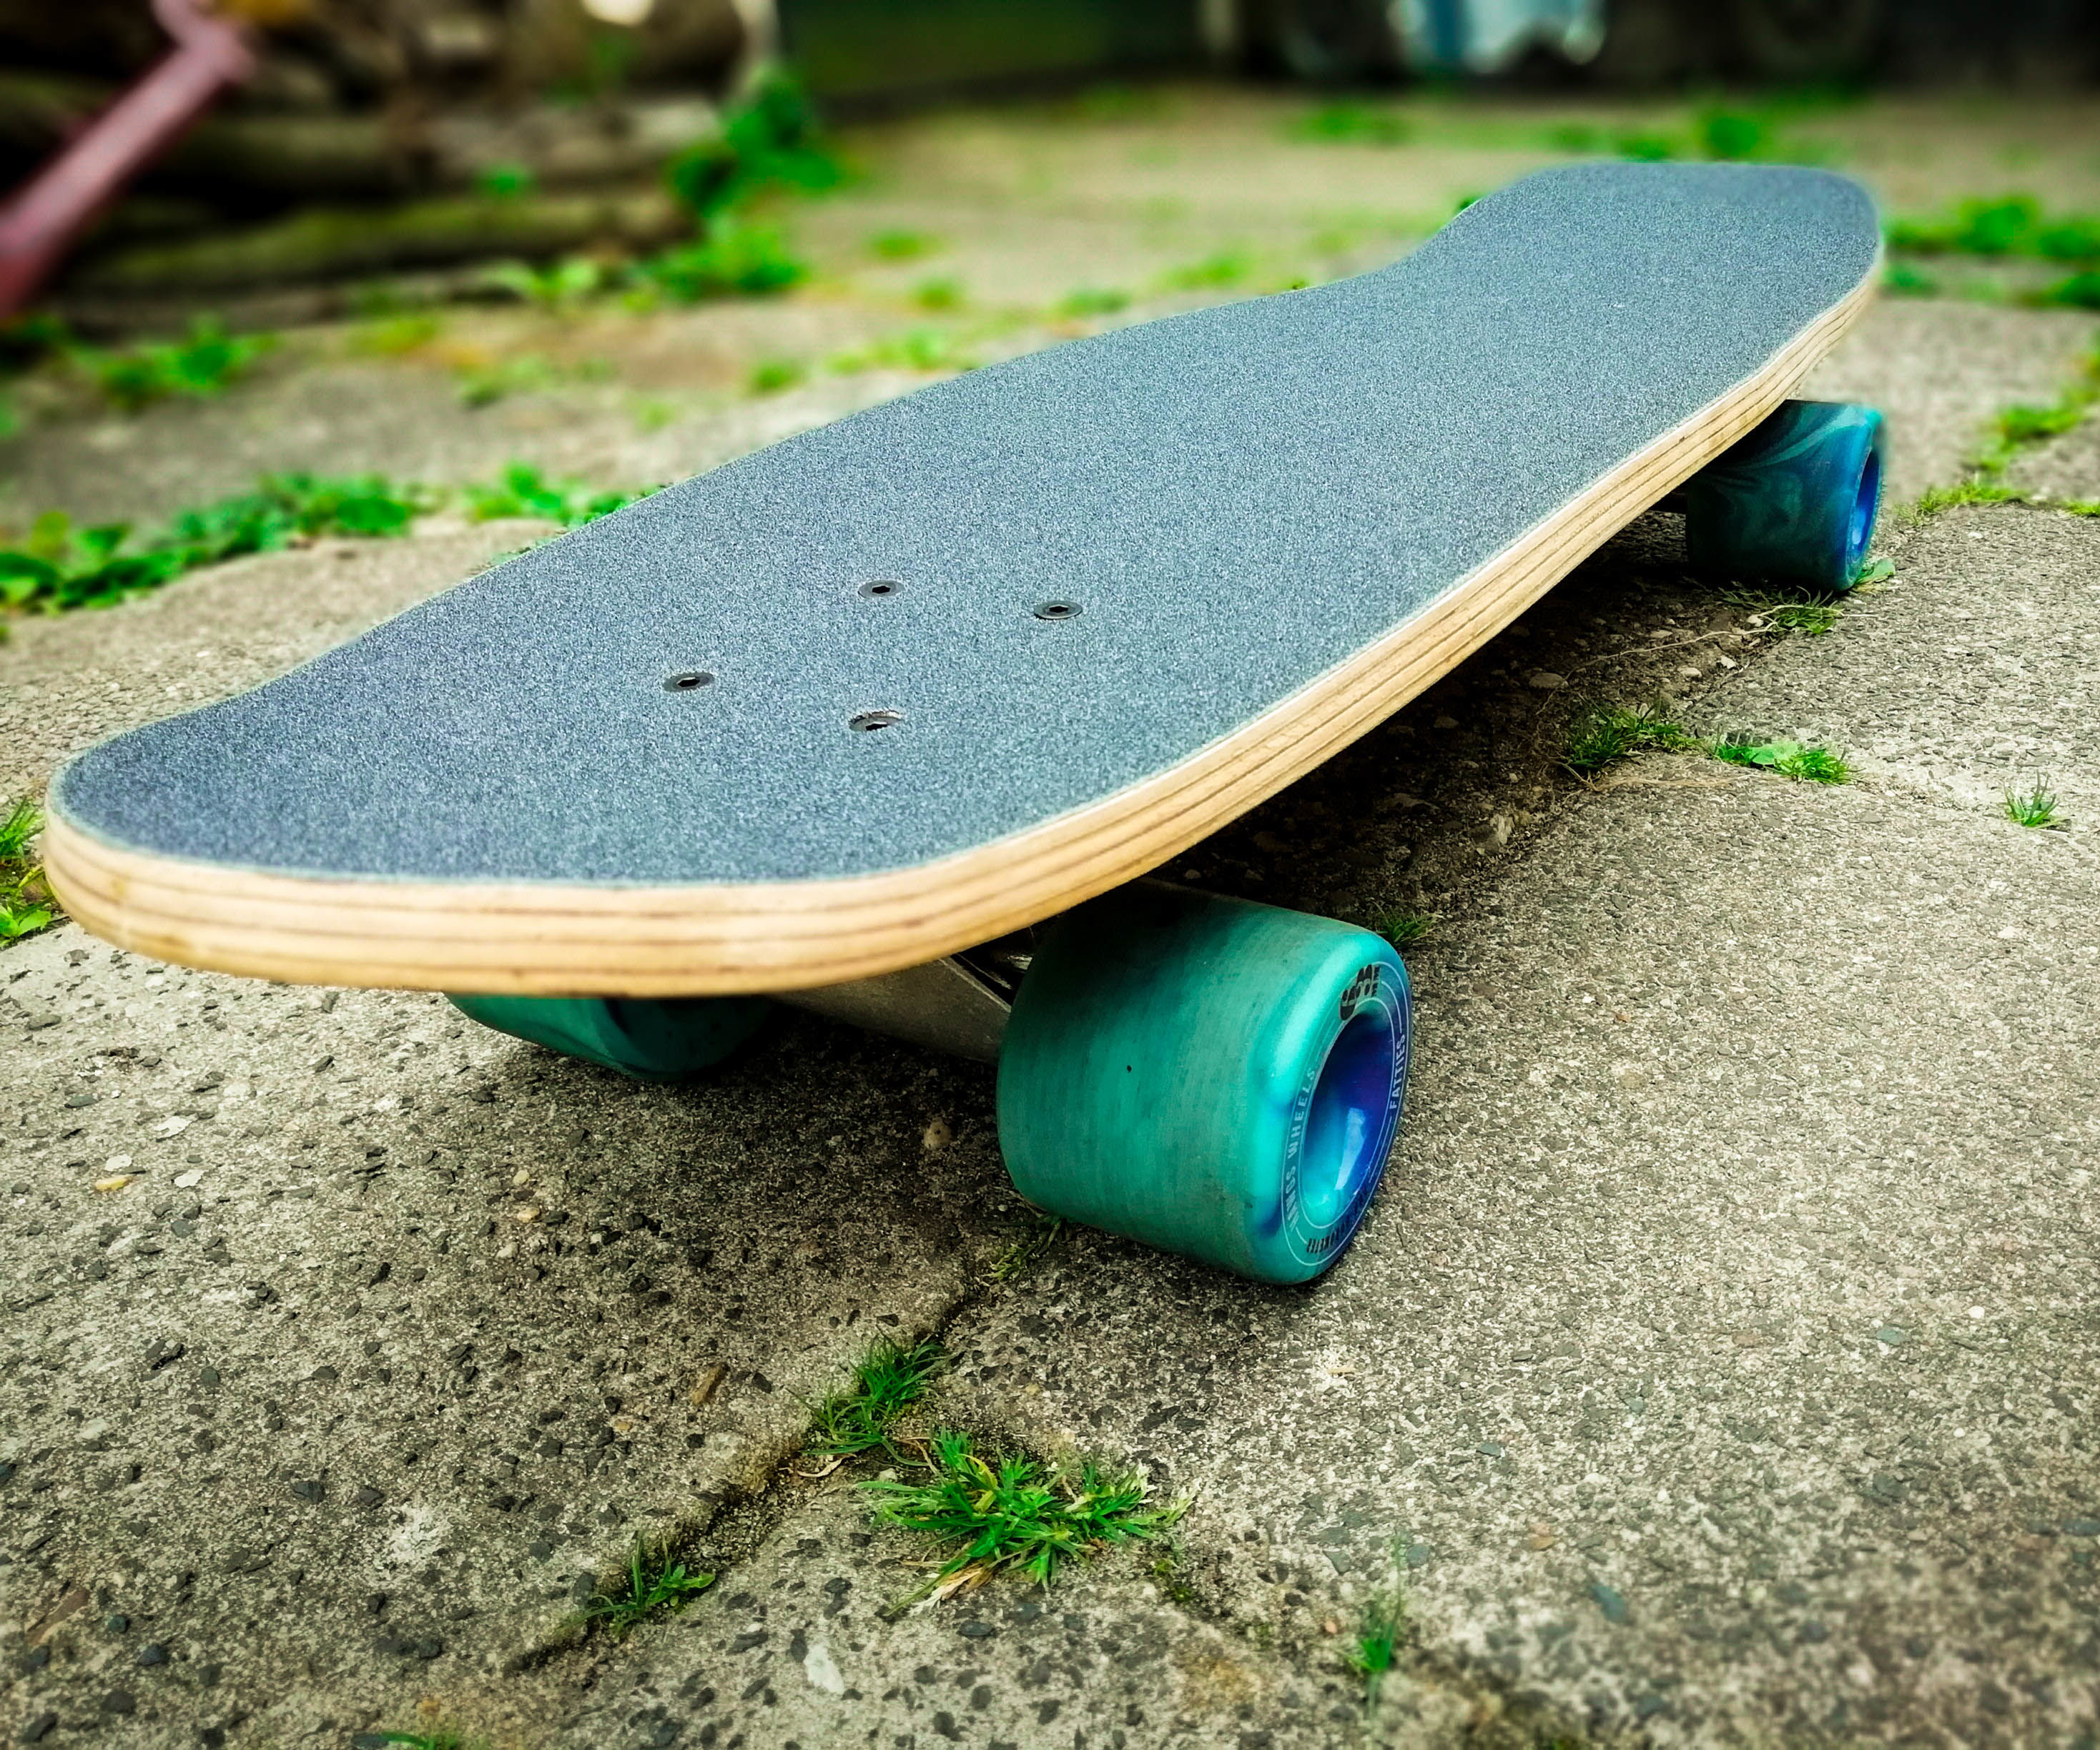 Making My Own Mini-cruiser Skateboard